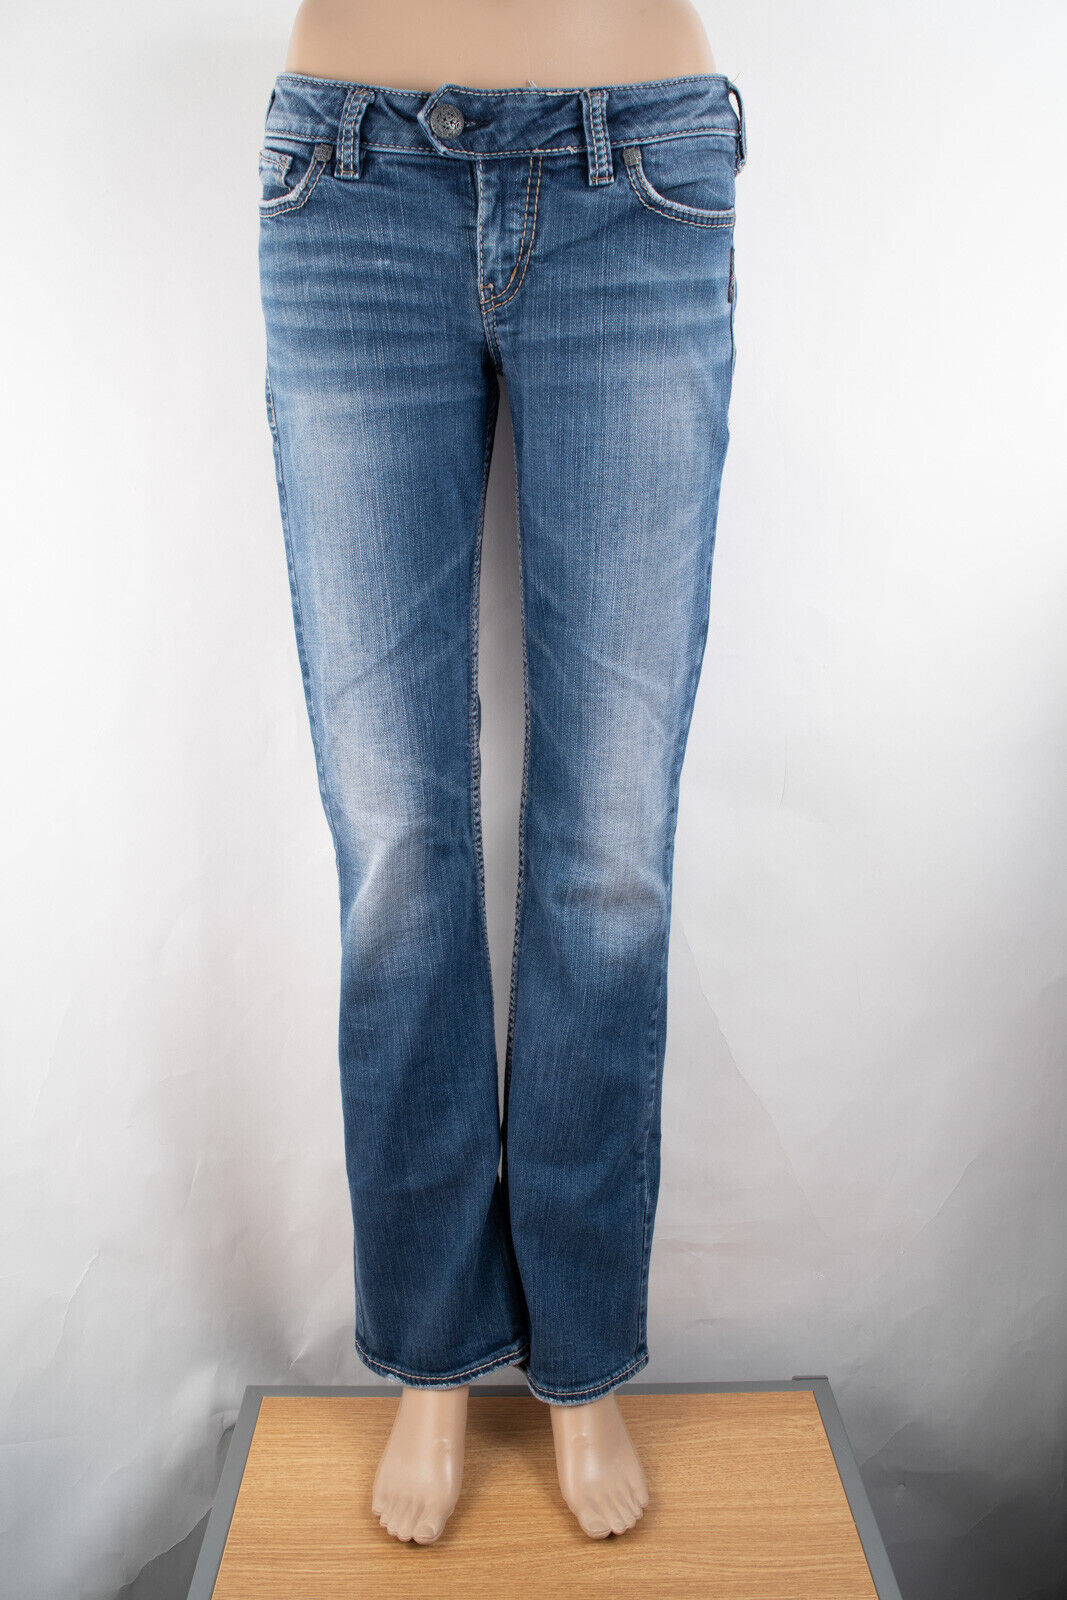 Silver Jeans Tuesday Low Slim Bootcut 29 (30 X 31) Women's Denim Jeans Faux  Flap | eBay